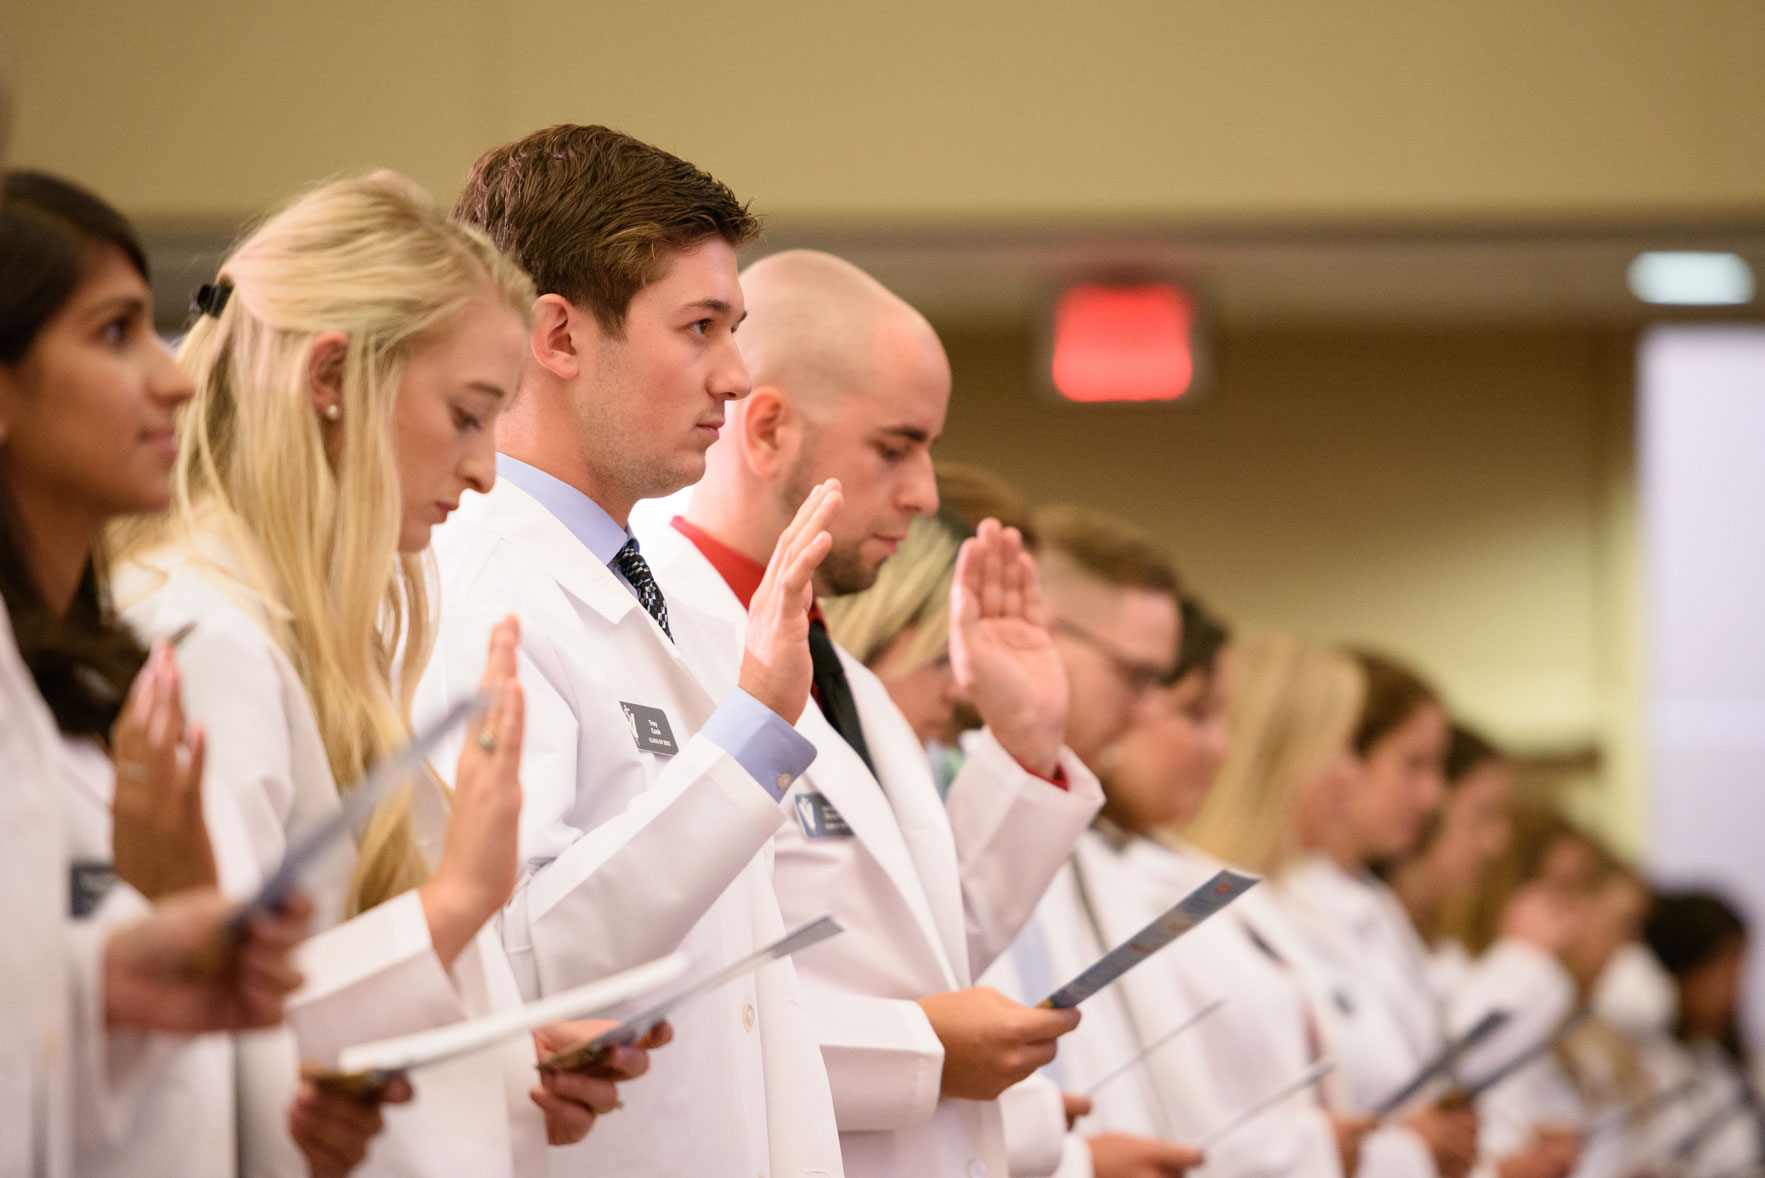 veterinarian graduates taking the oath